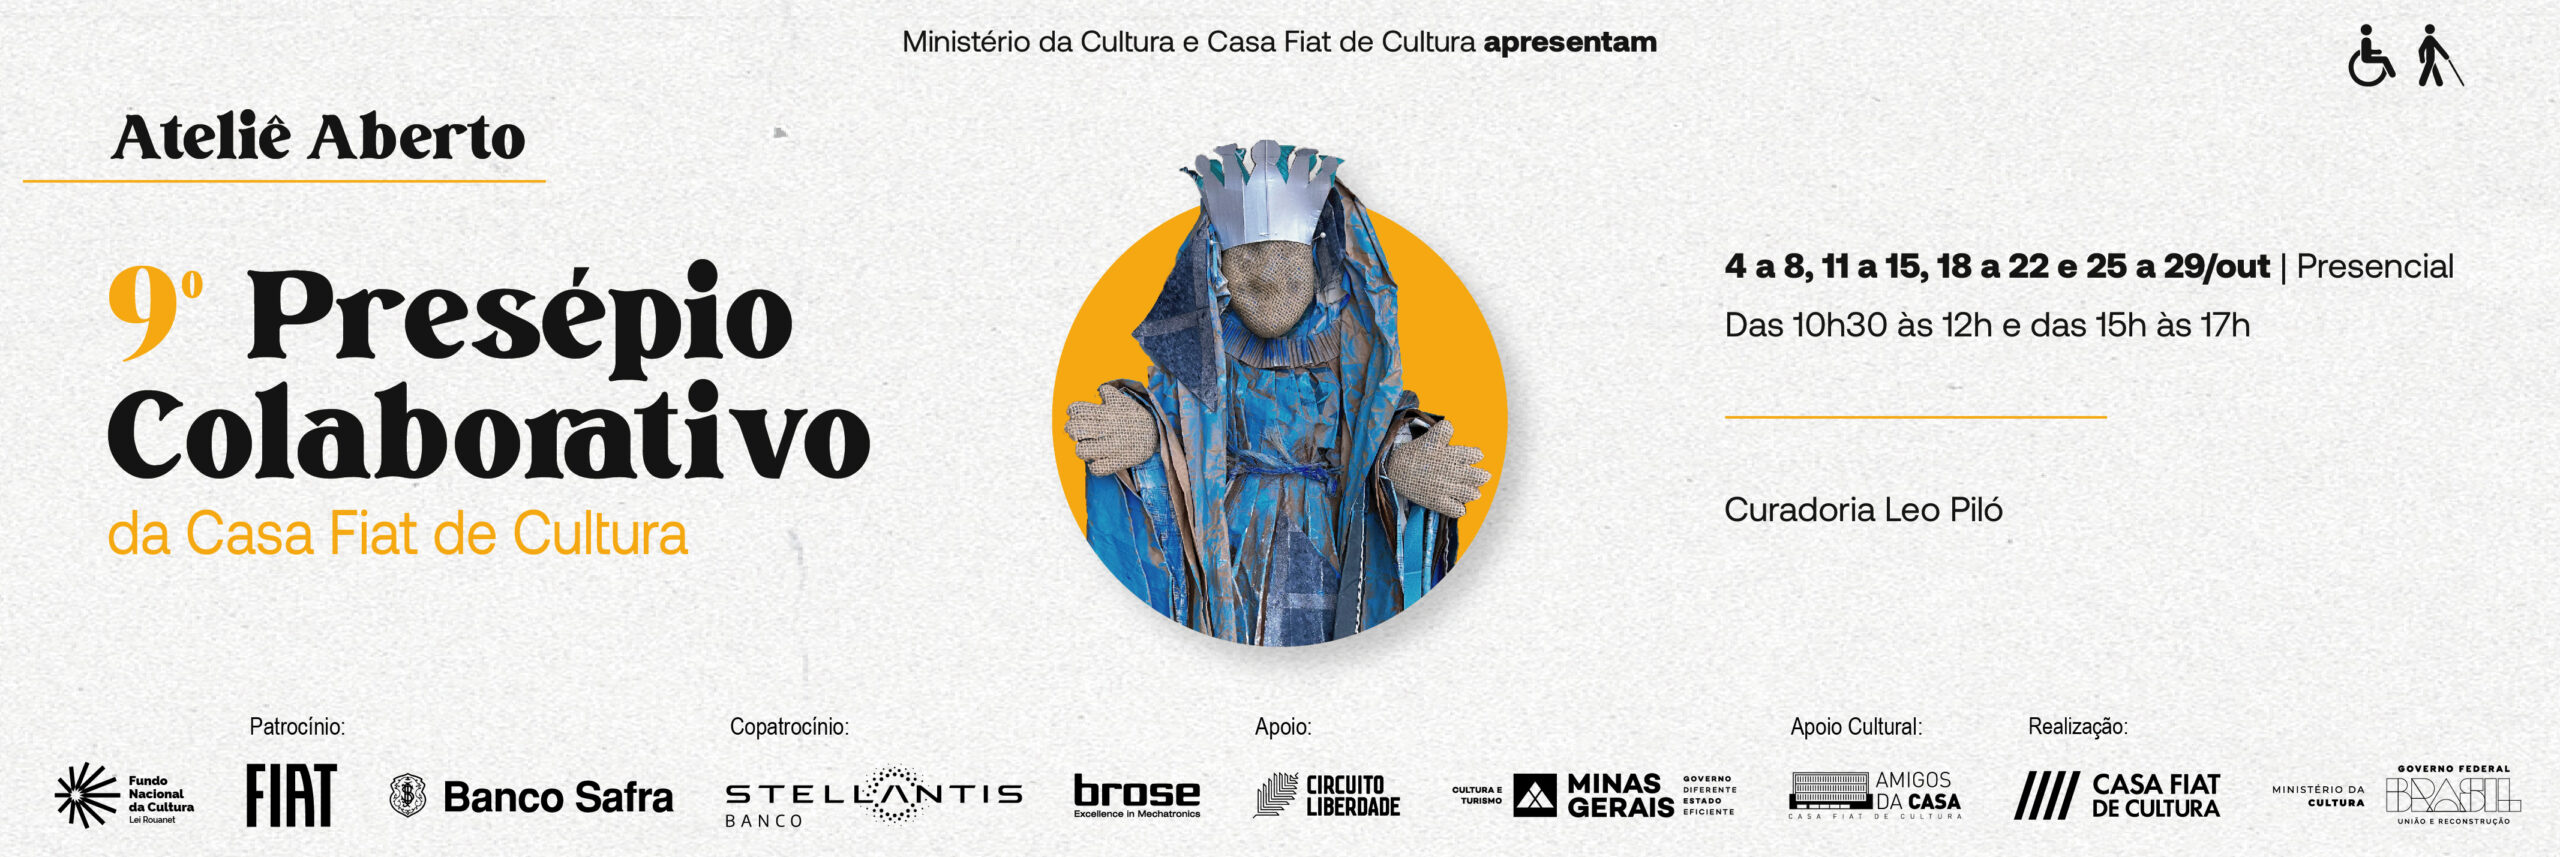 Ateliê Aberto | 9º Presépio Colaborativo da Casa Fiat de Cultura